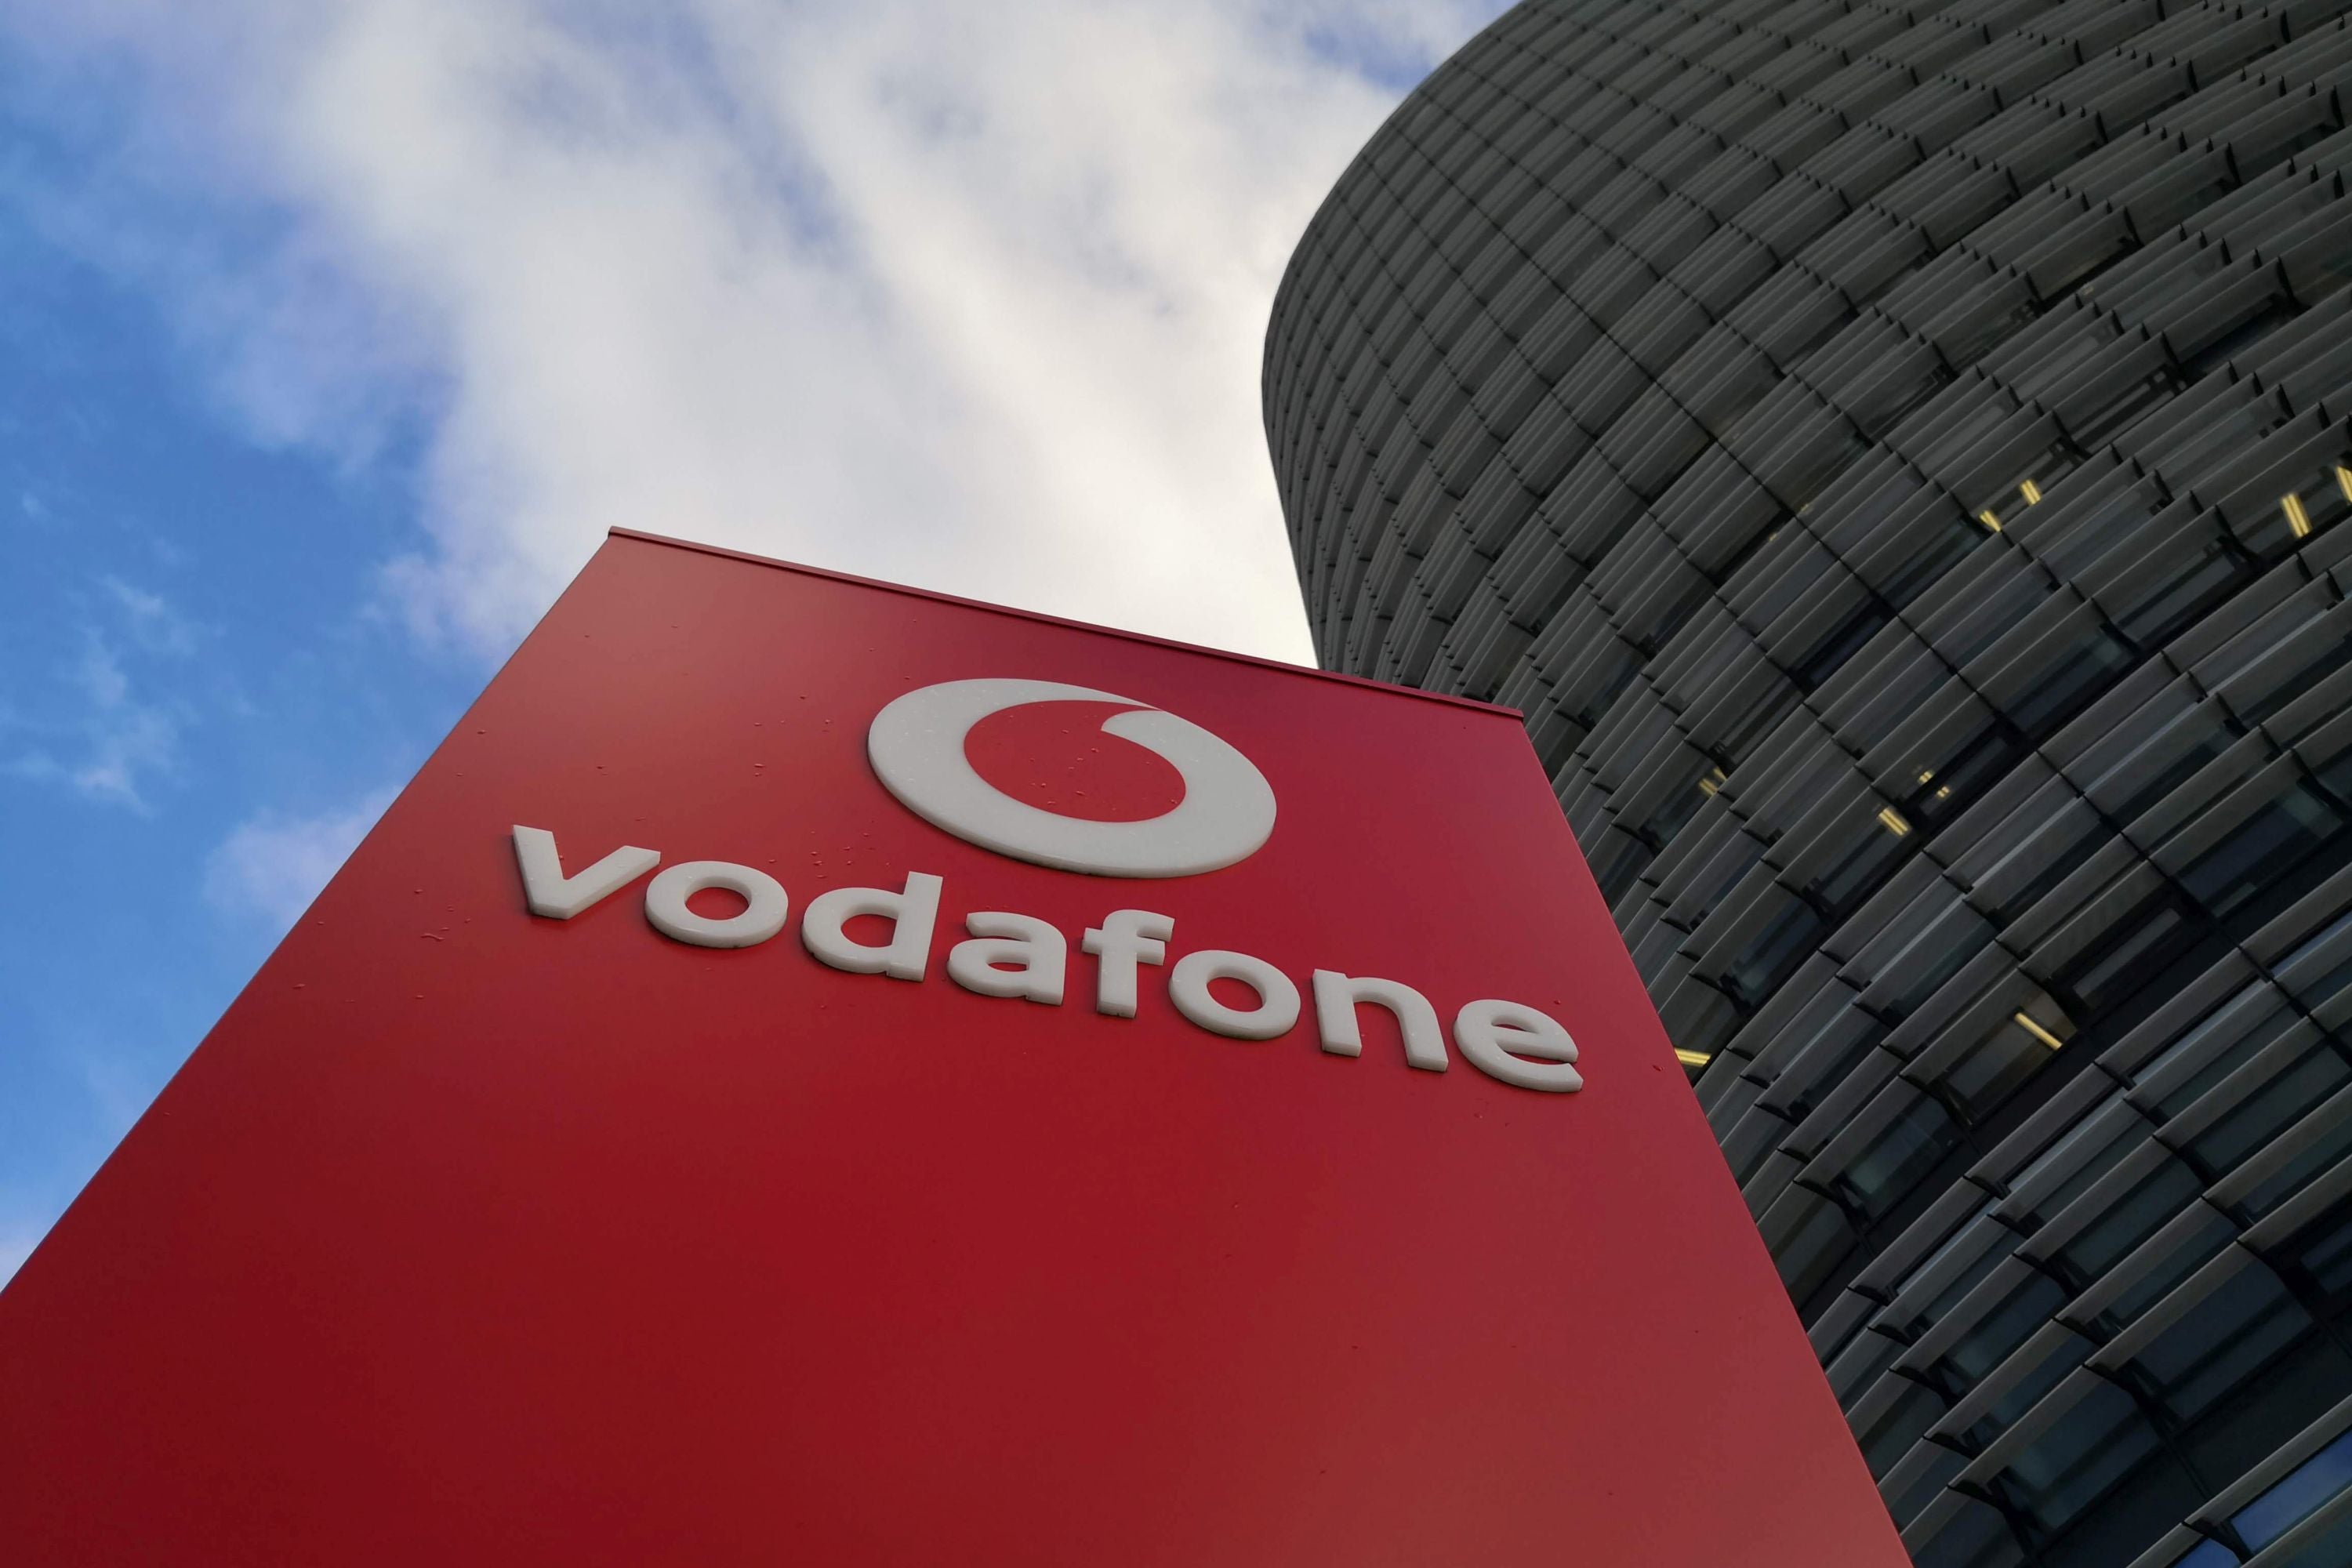 Vodafone plant neues TV-Angebot